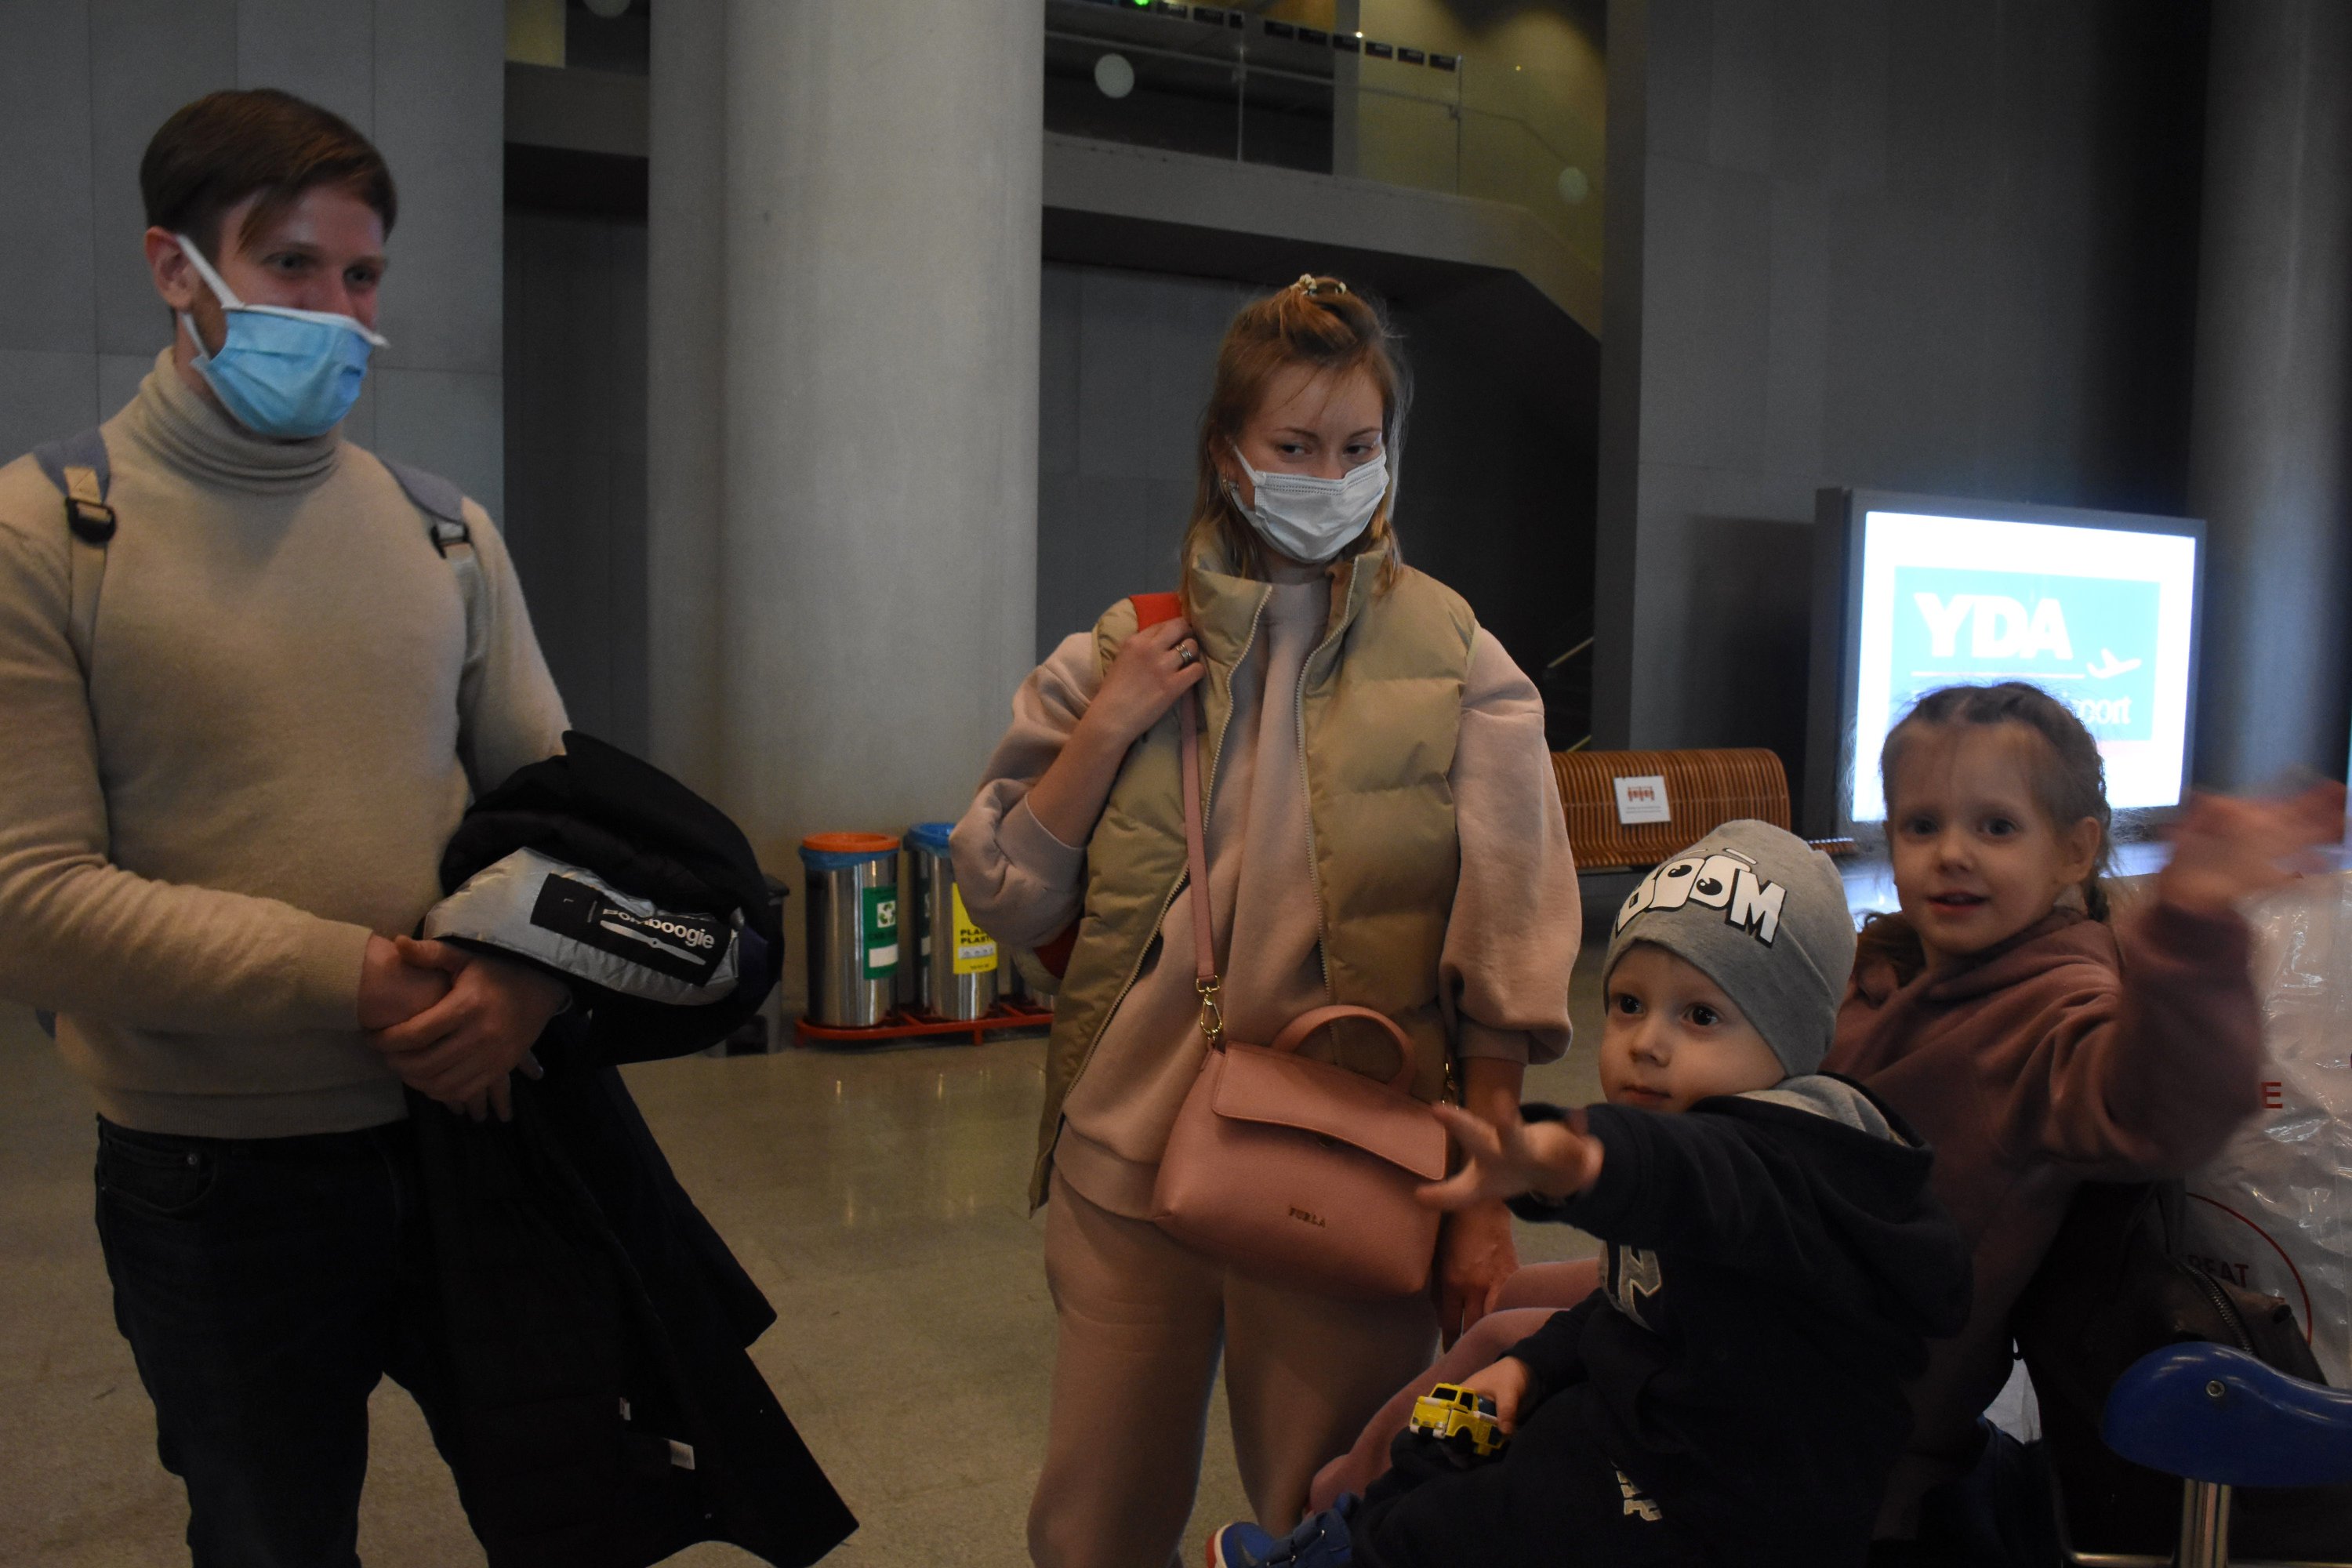 Mihhail Kehonko and his family arrive at Dalaman Airport, Muğla, southwestern Turkey, March 19, 2021. (AA Photo)